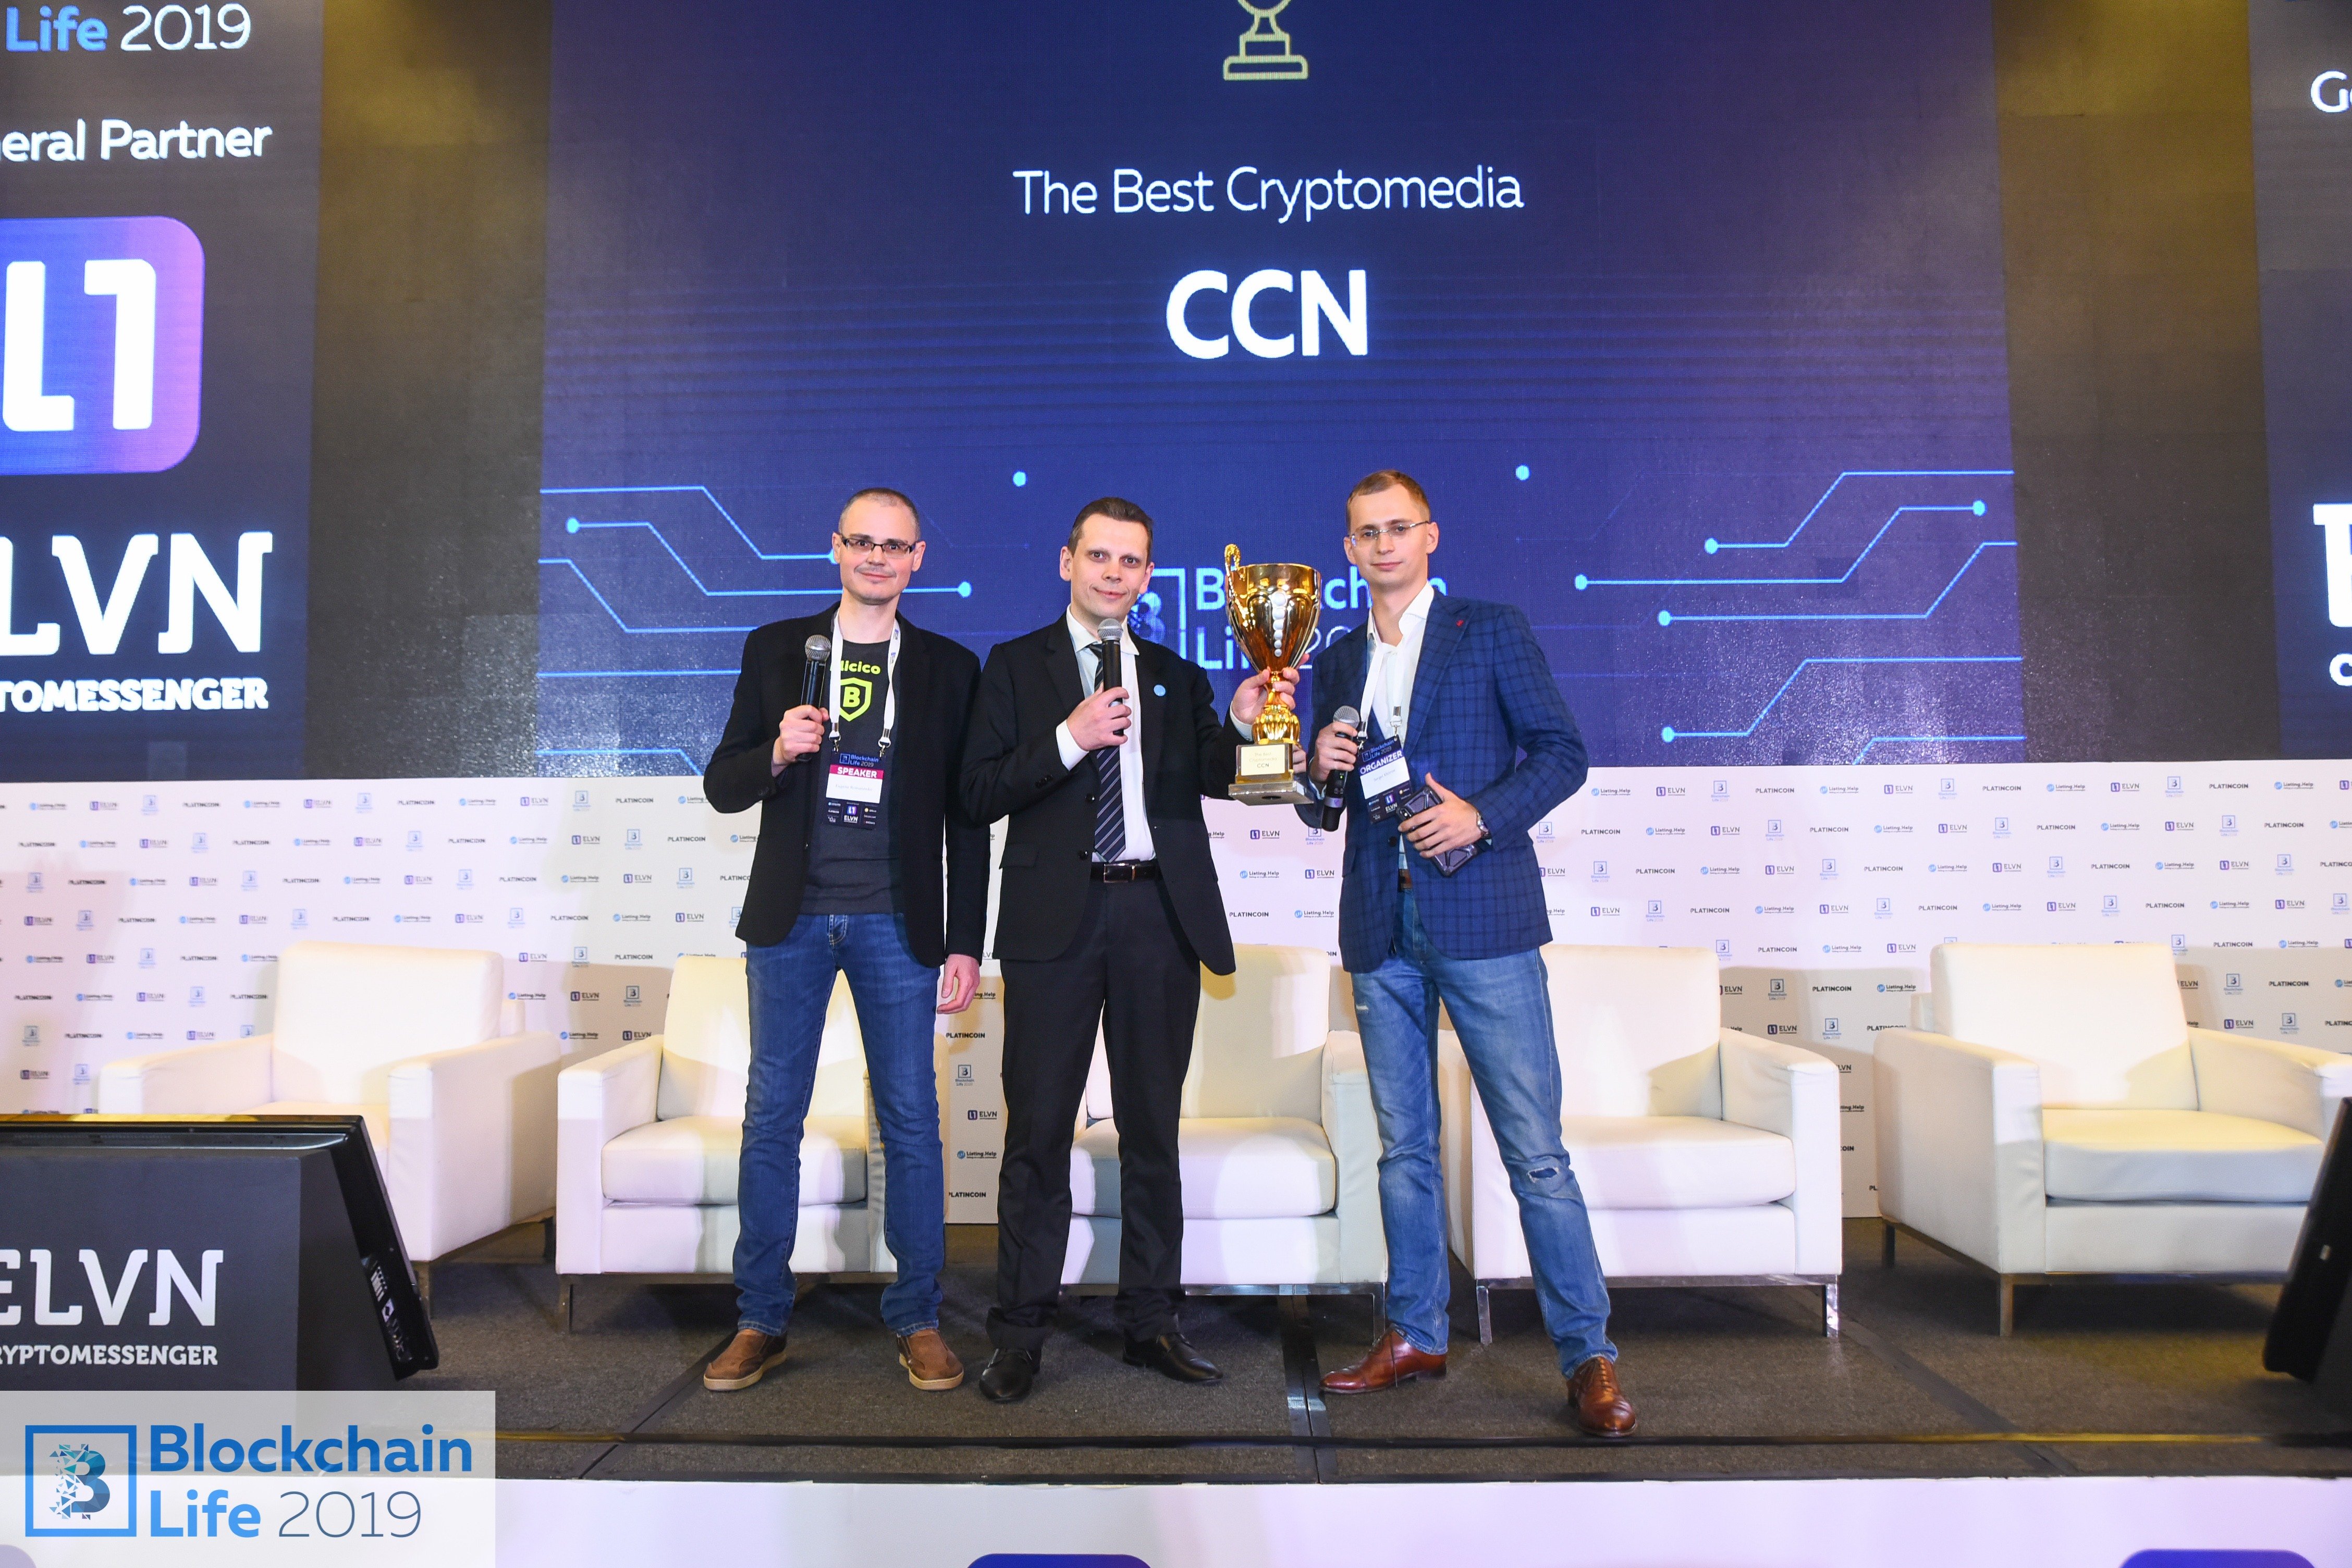 Blockchain Life 2019 Asia "Best Cryptomedia Award" went to CCN.com